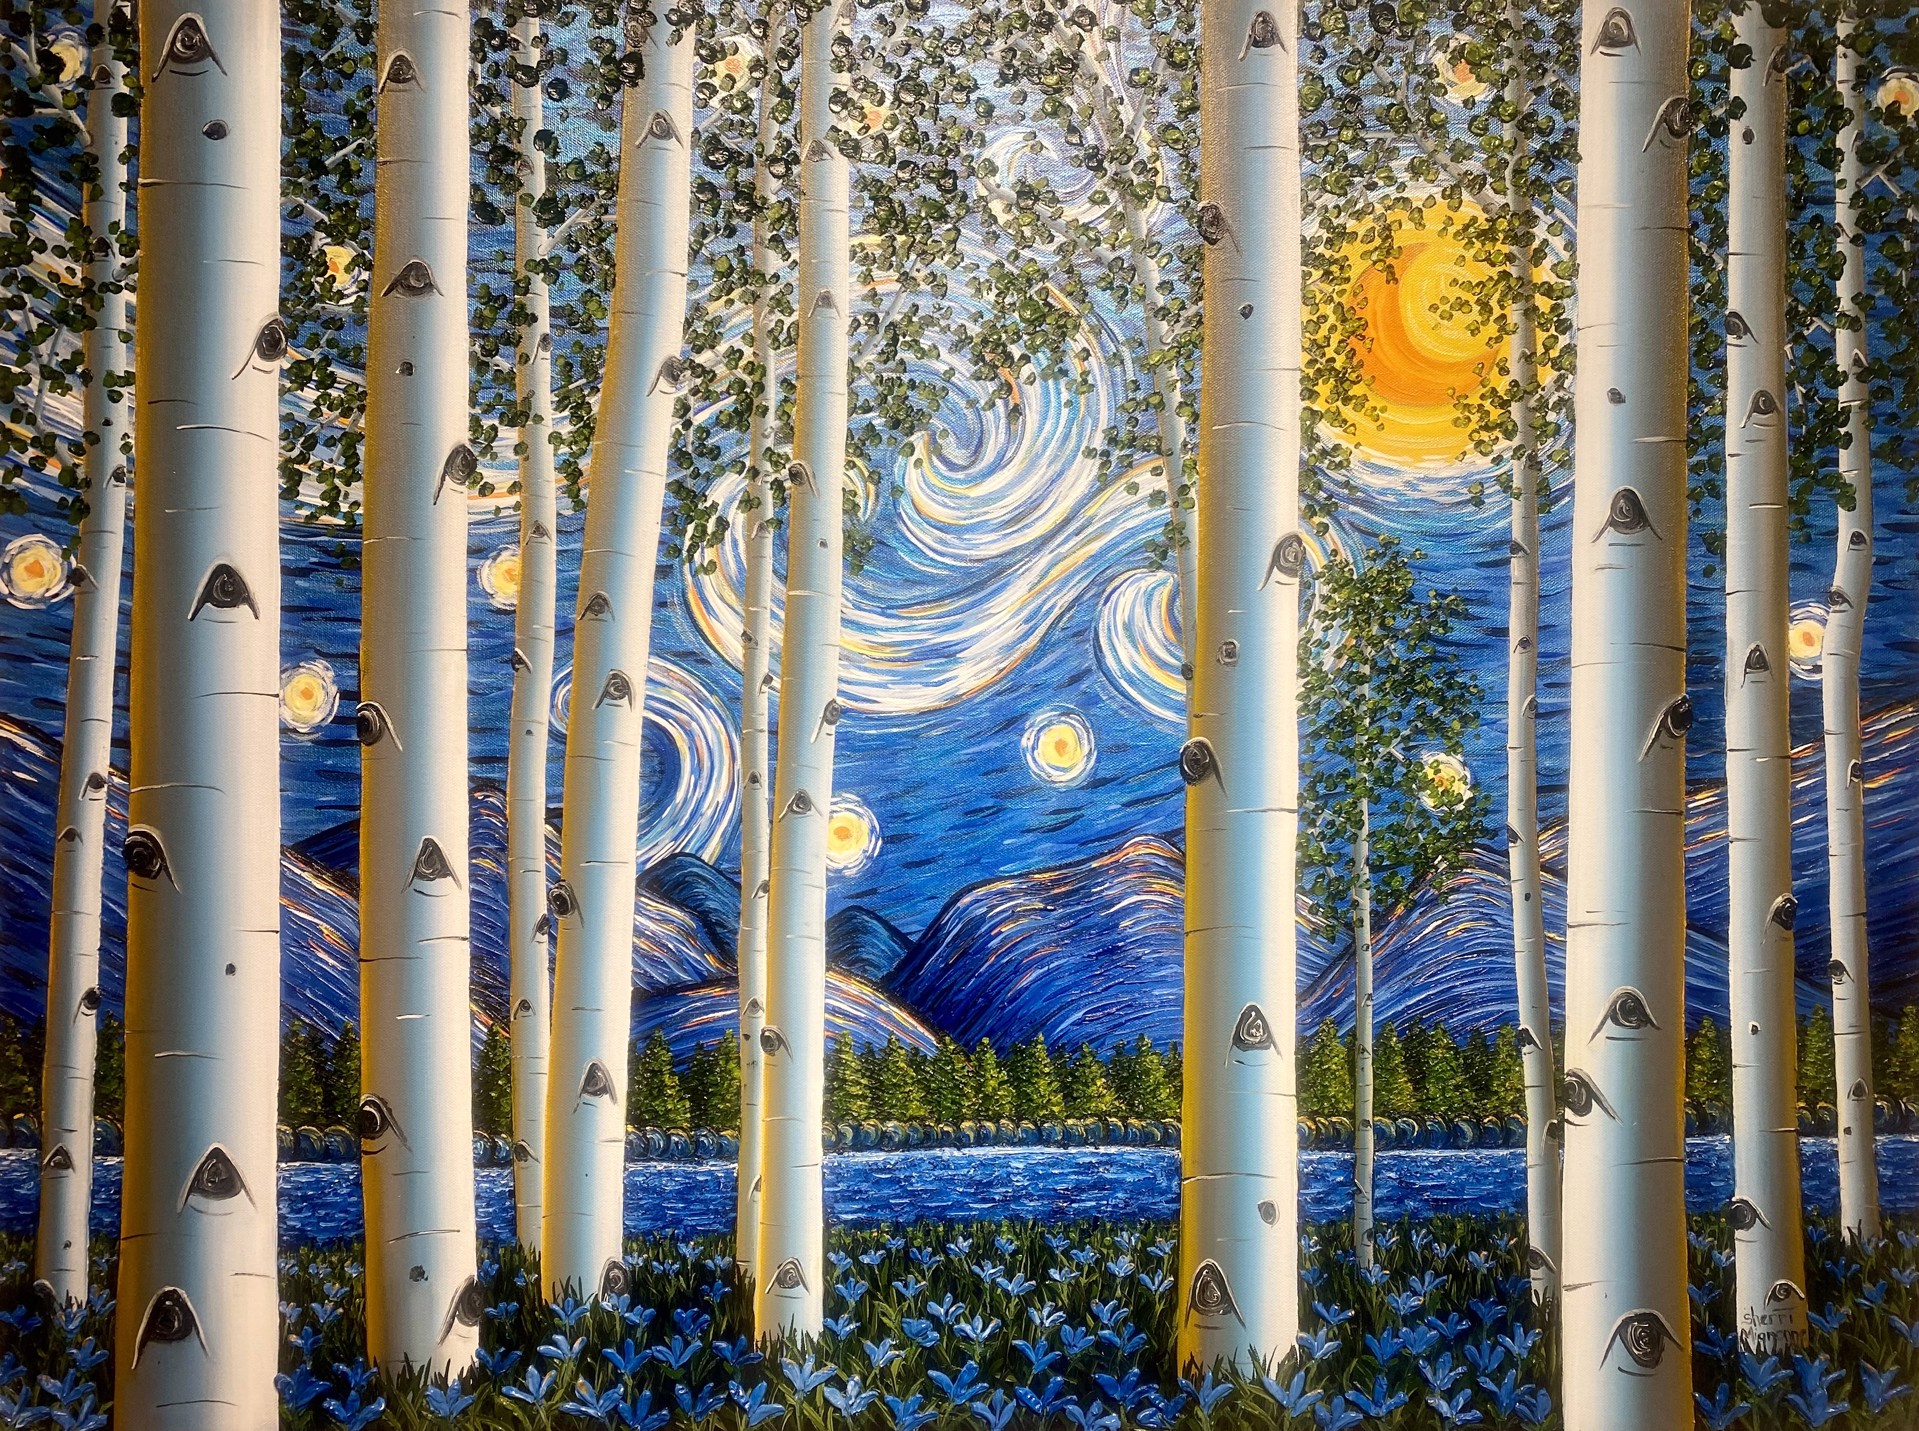 Starry Night Series "Wonder" by Sherri Mignonne